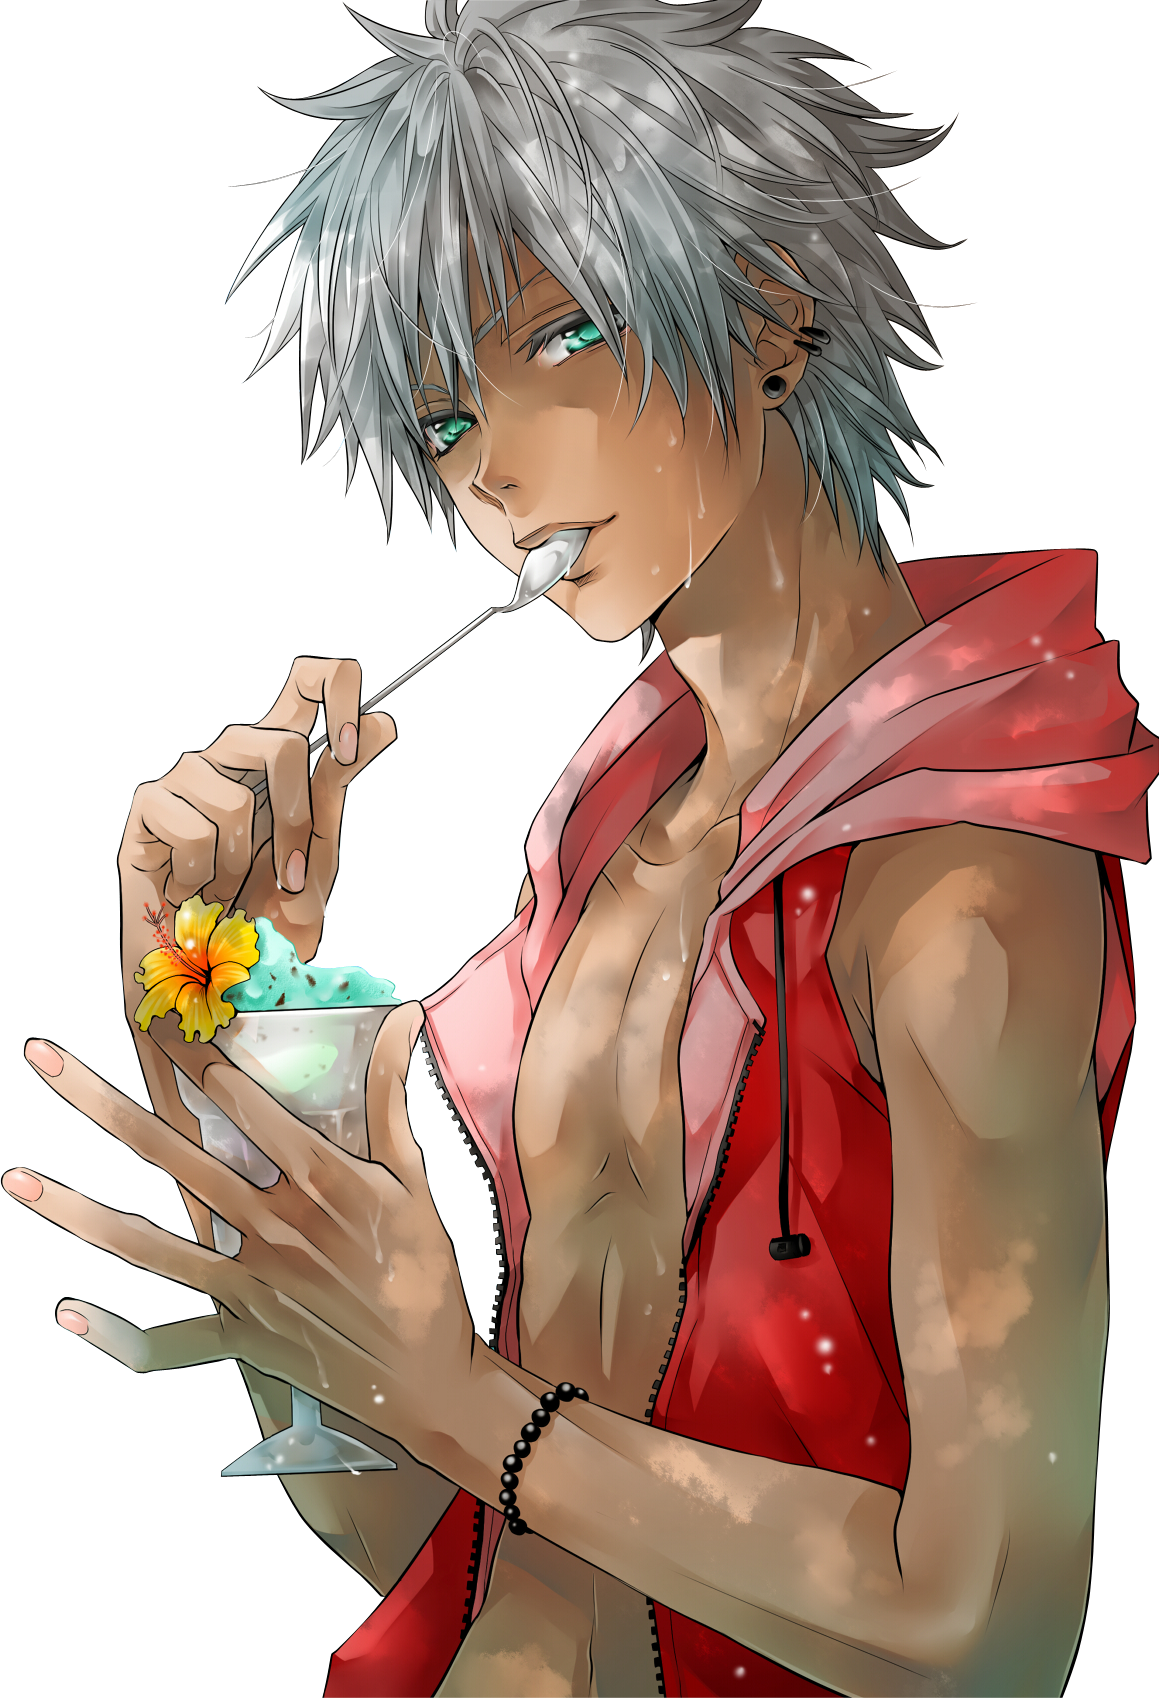 Boy Anime Eating Ice Cream - Hot Black Anime Guys (1159x1698)